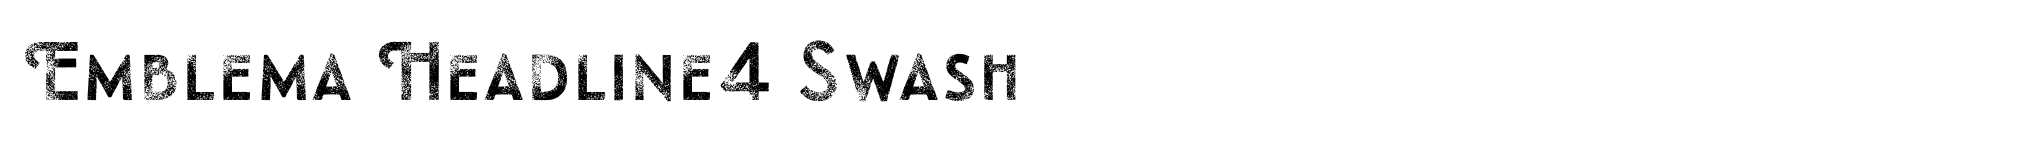 Emblema Headline4 Swash image